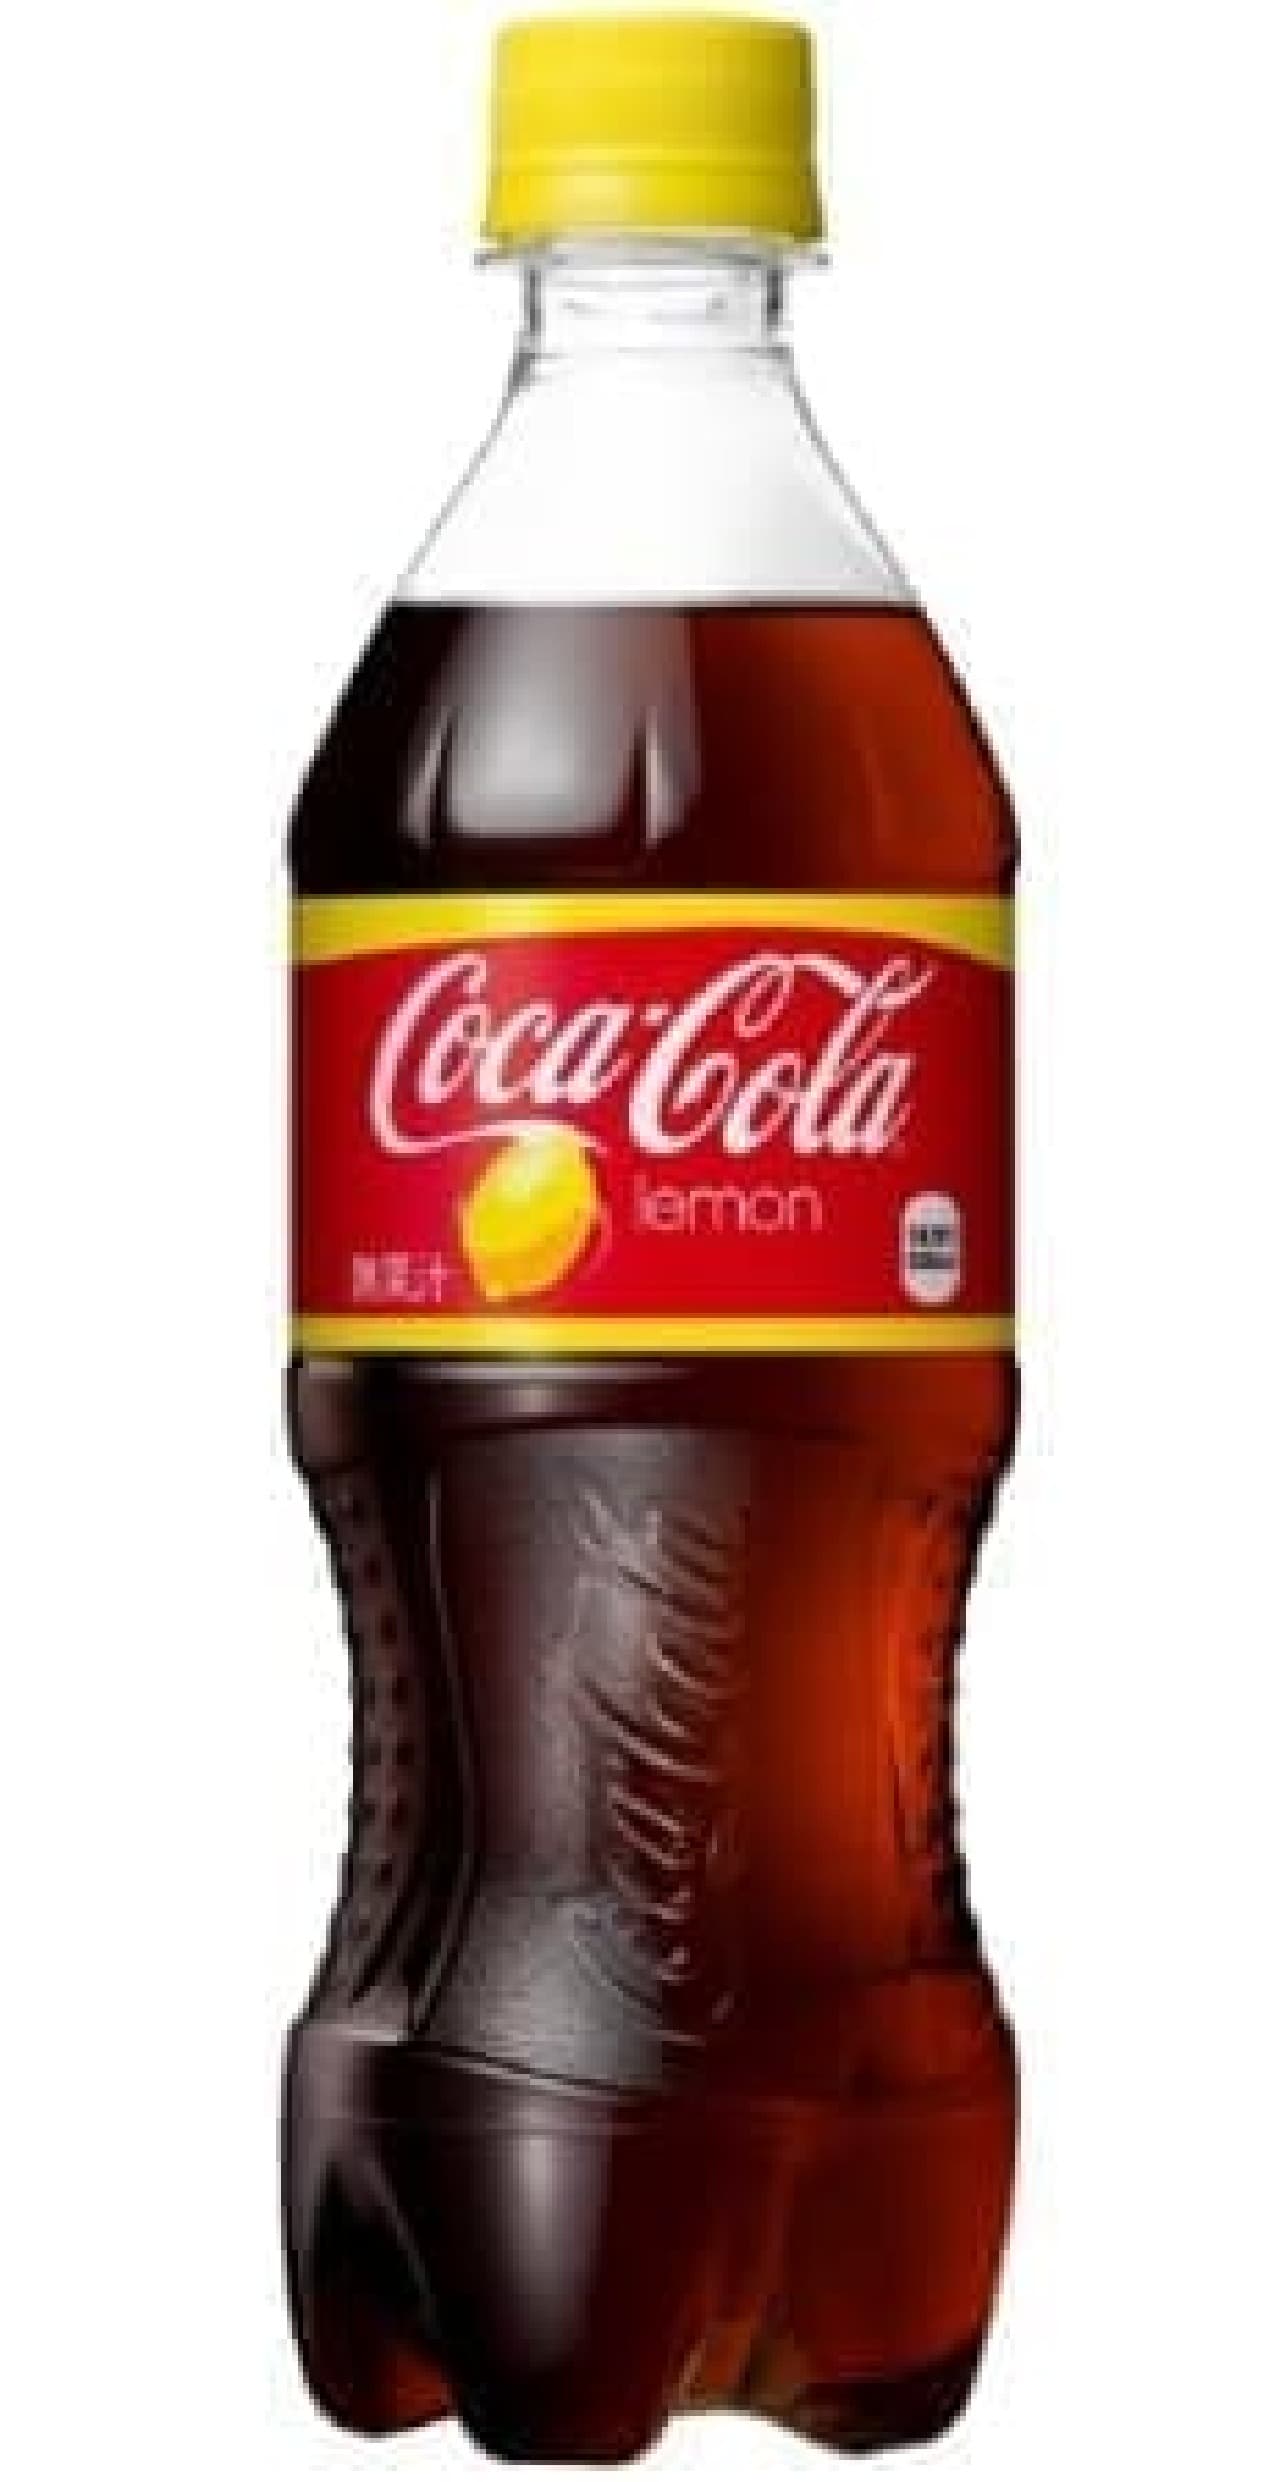 Coca-Cola Lemon is back!